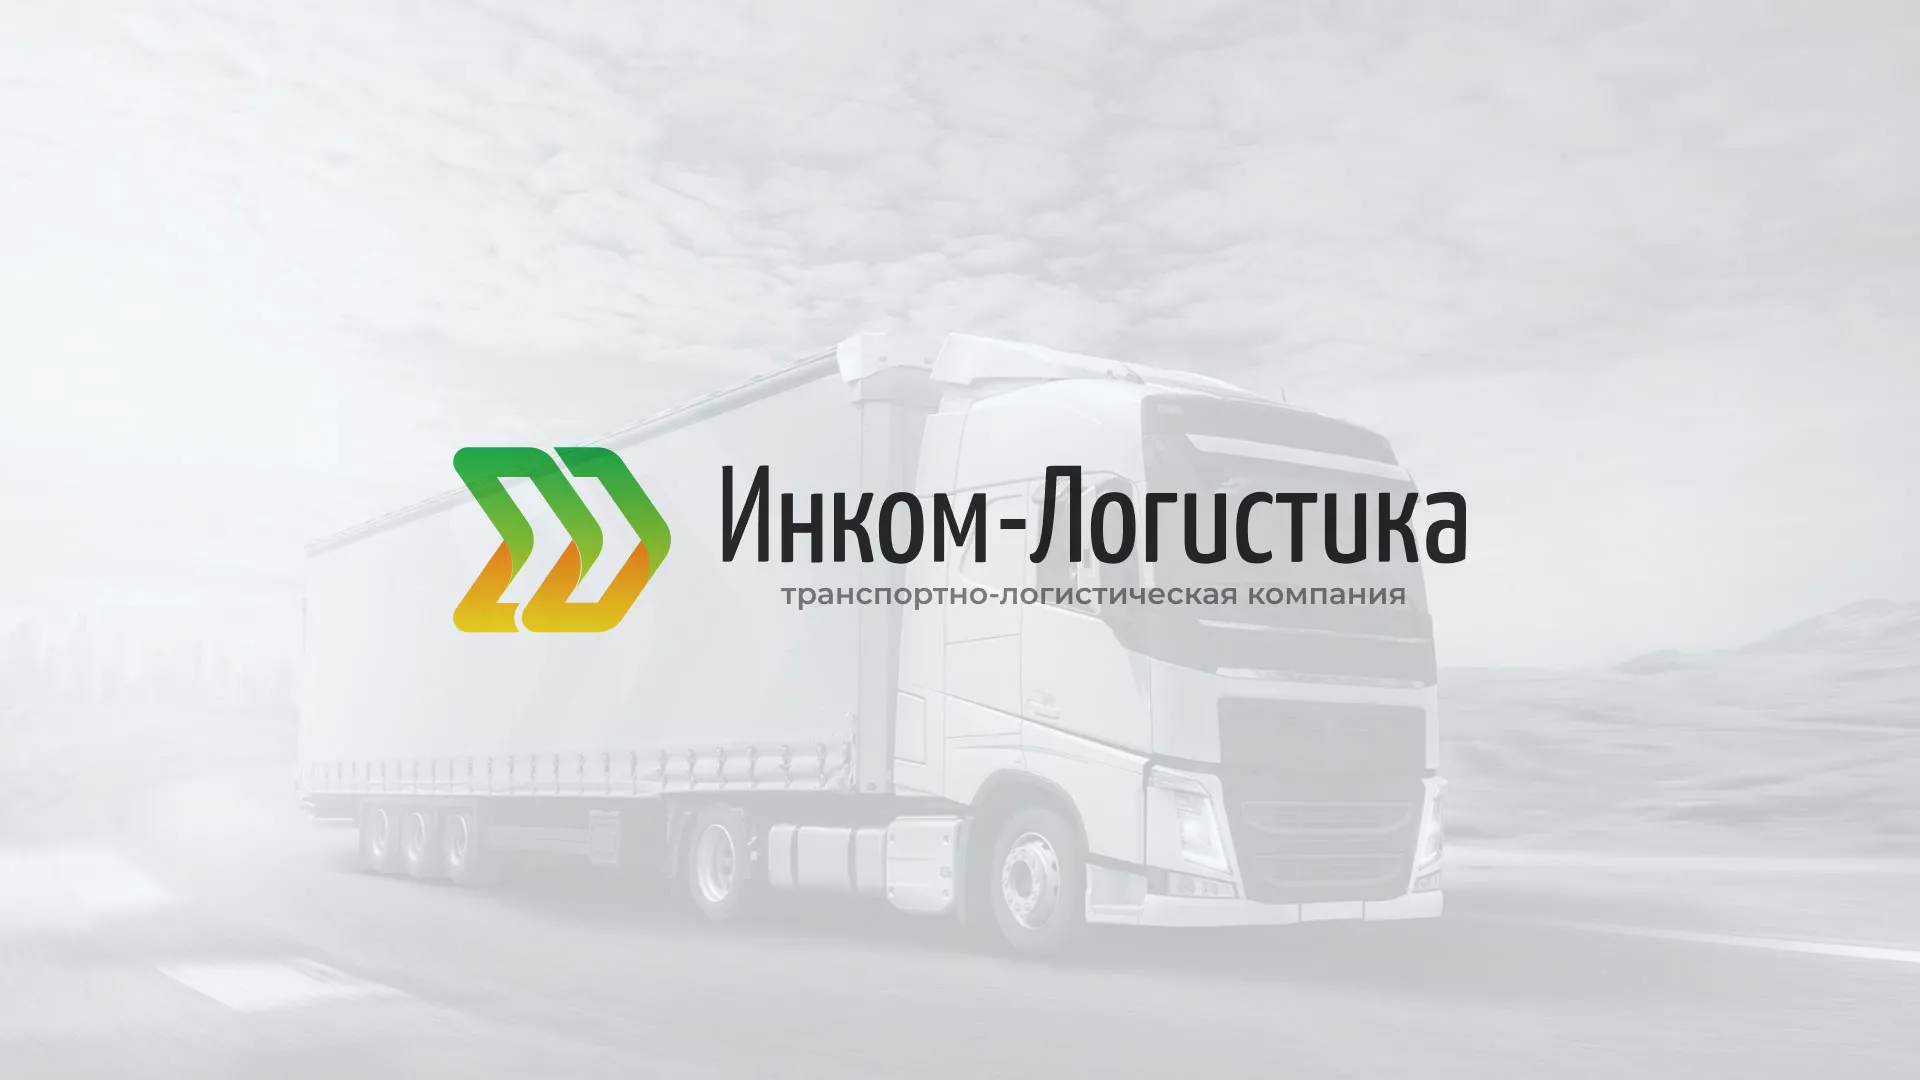 Разработка логотипа и сайта компании «Инком-Логистика» в Кодинске